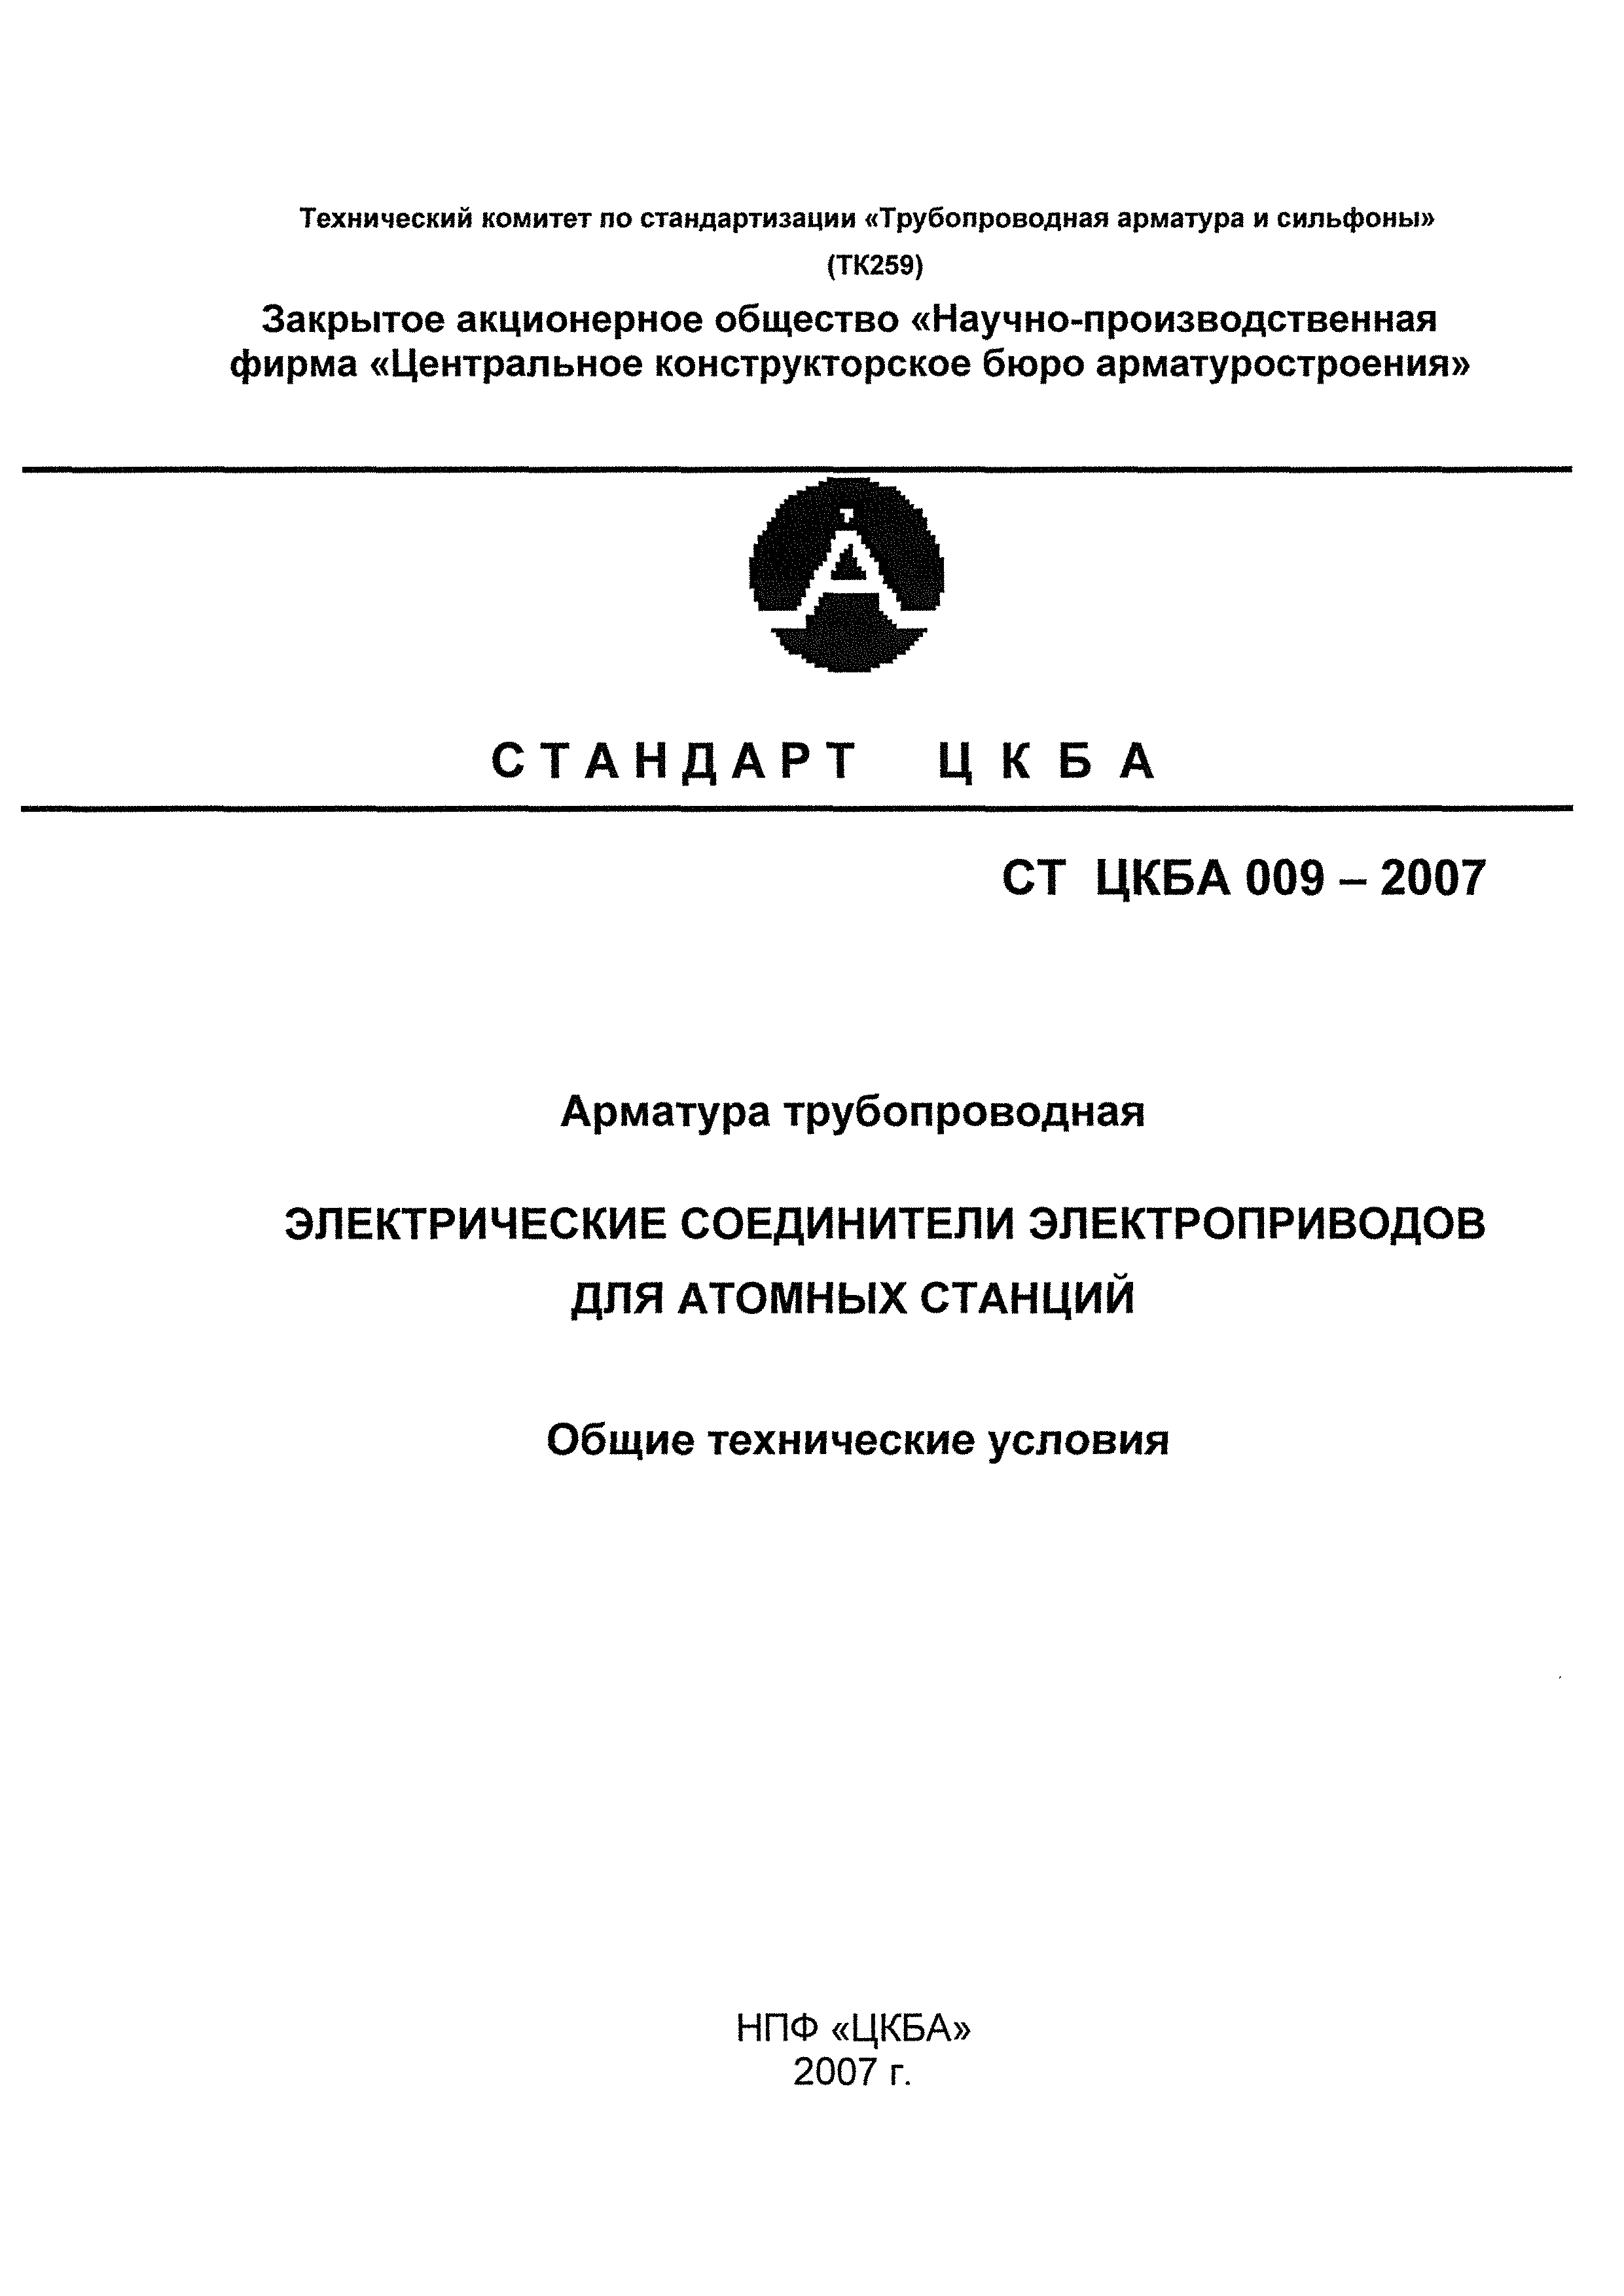 СТ ЦКБА 009-2007